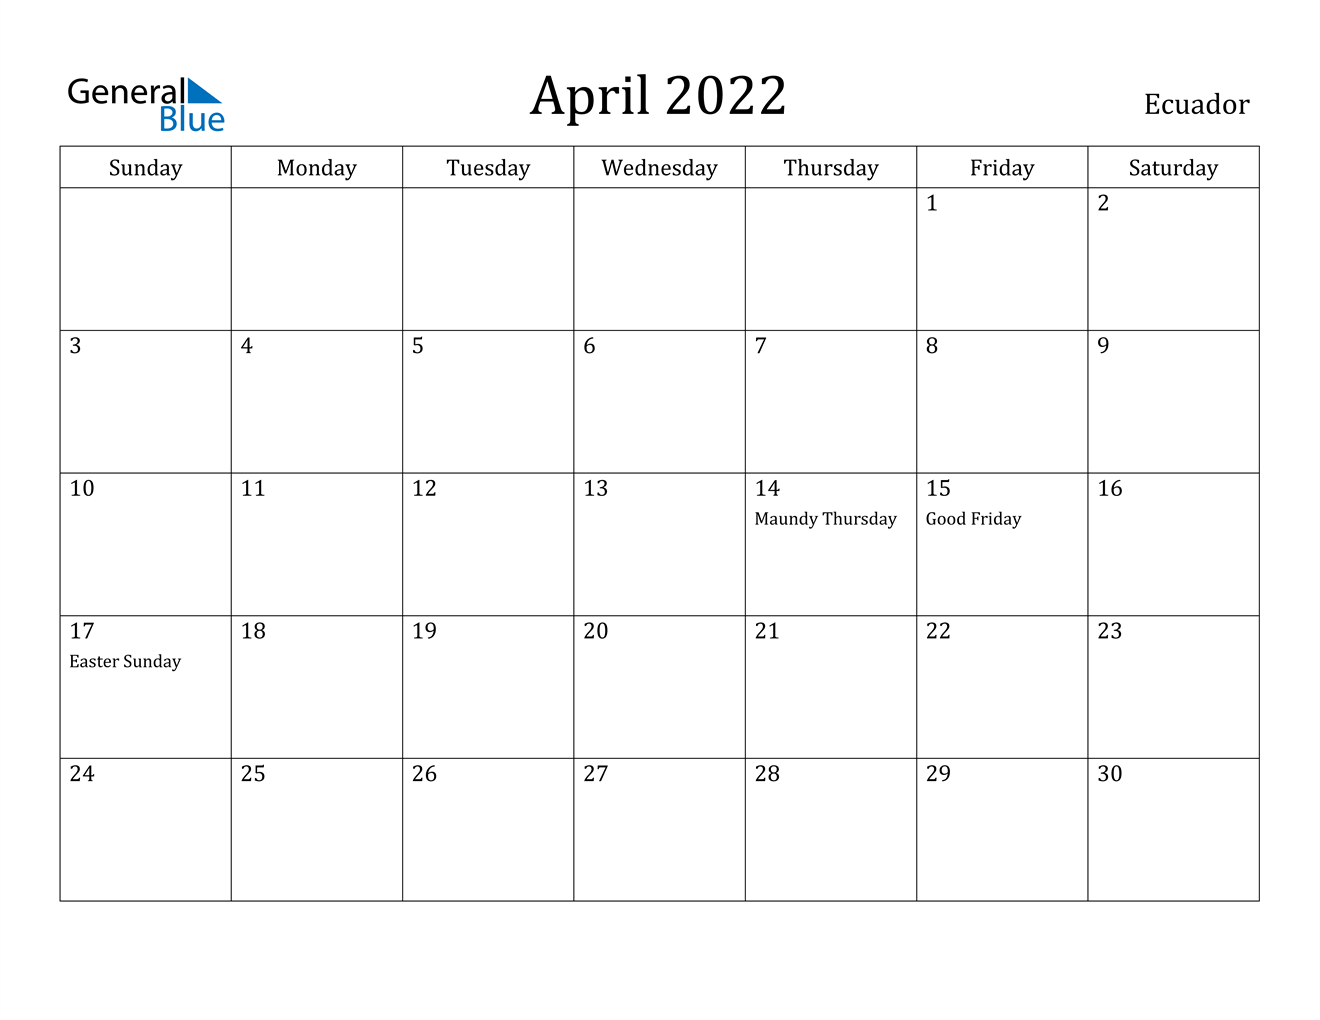 April 2022 Calendar - Ecuador